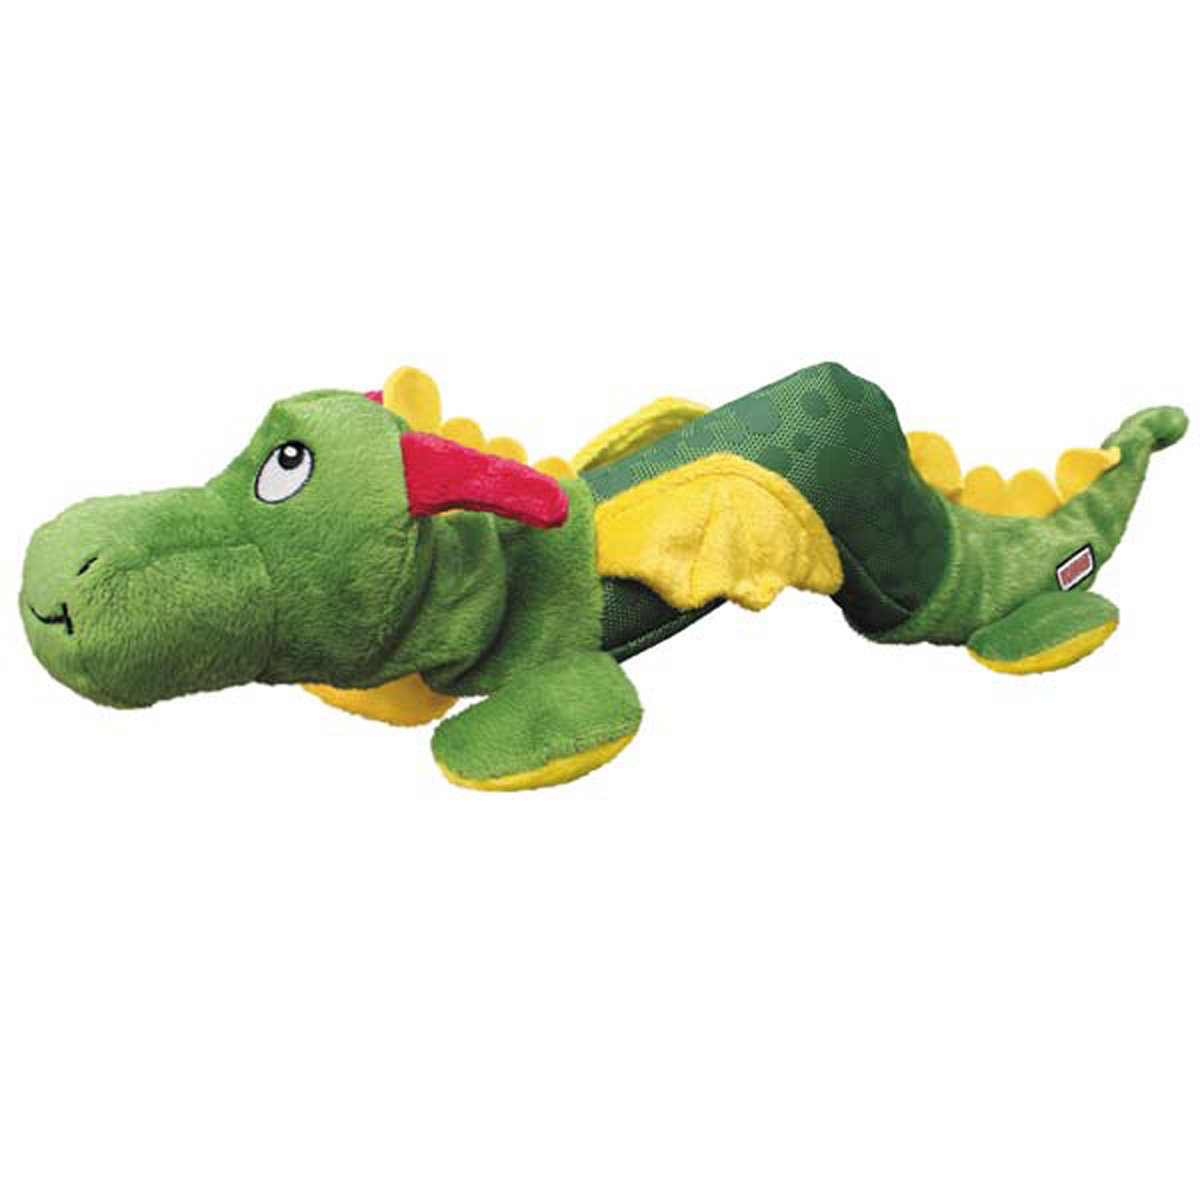 KONG Shakers Dog Toy - Green Dragon